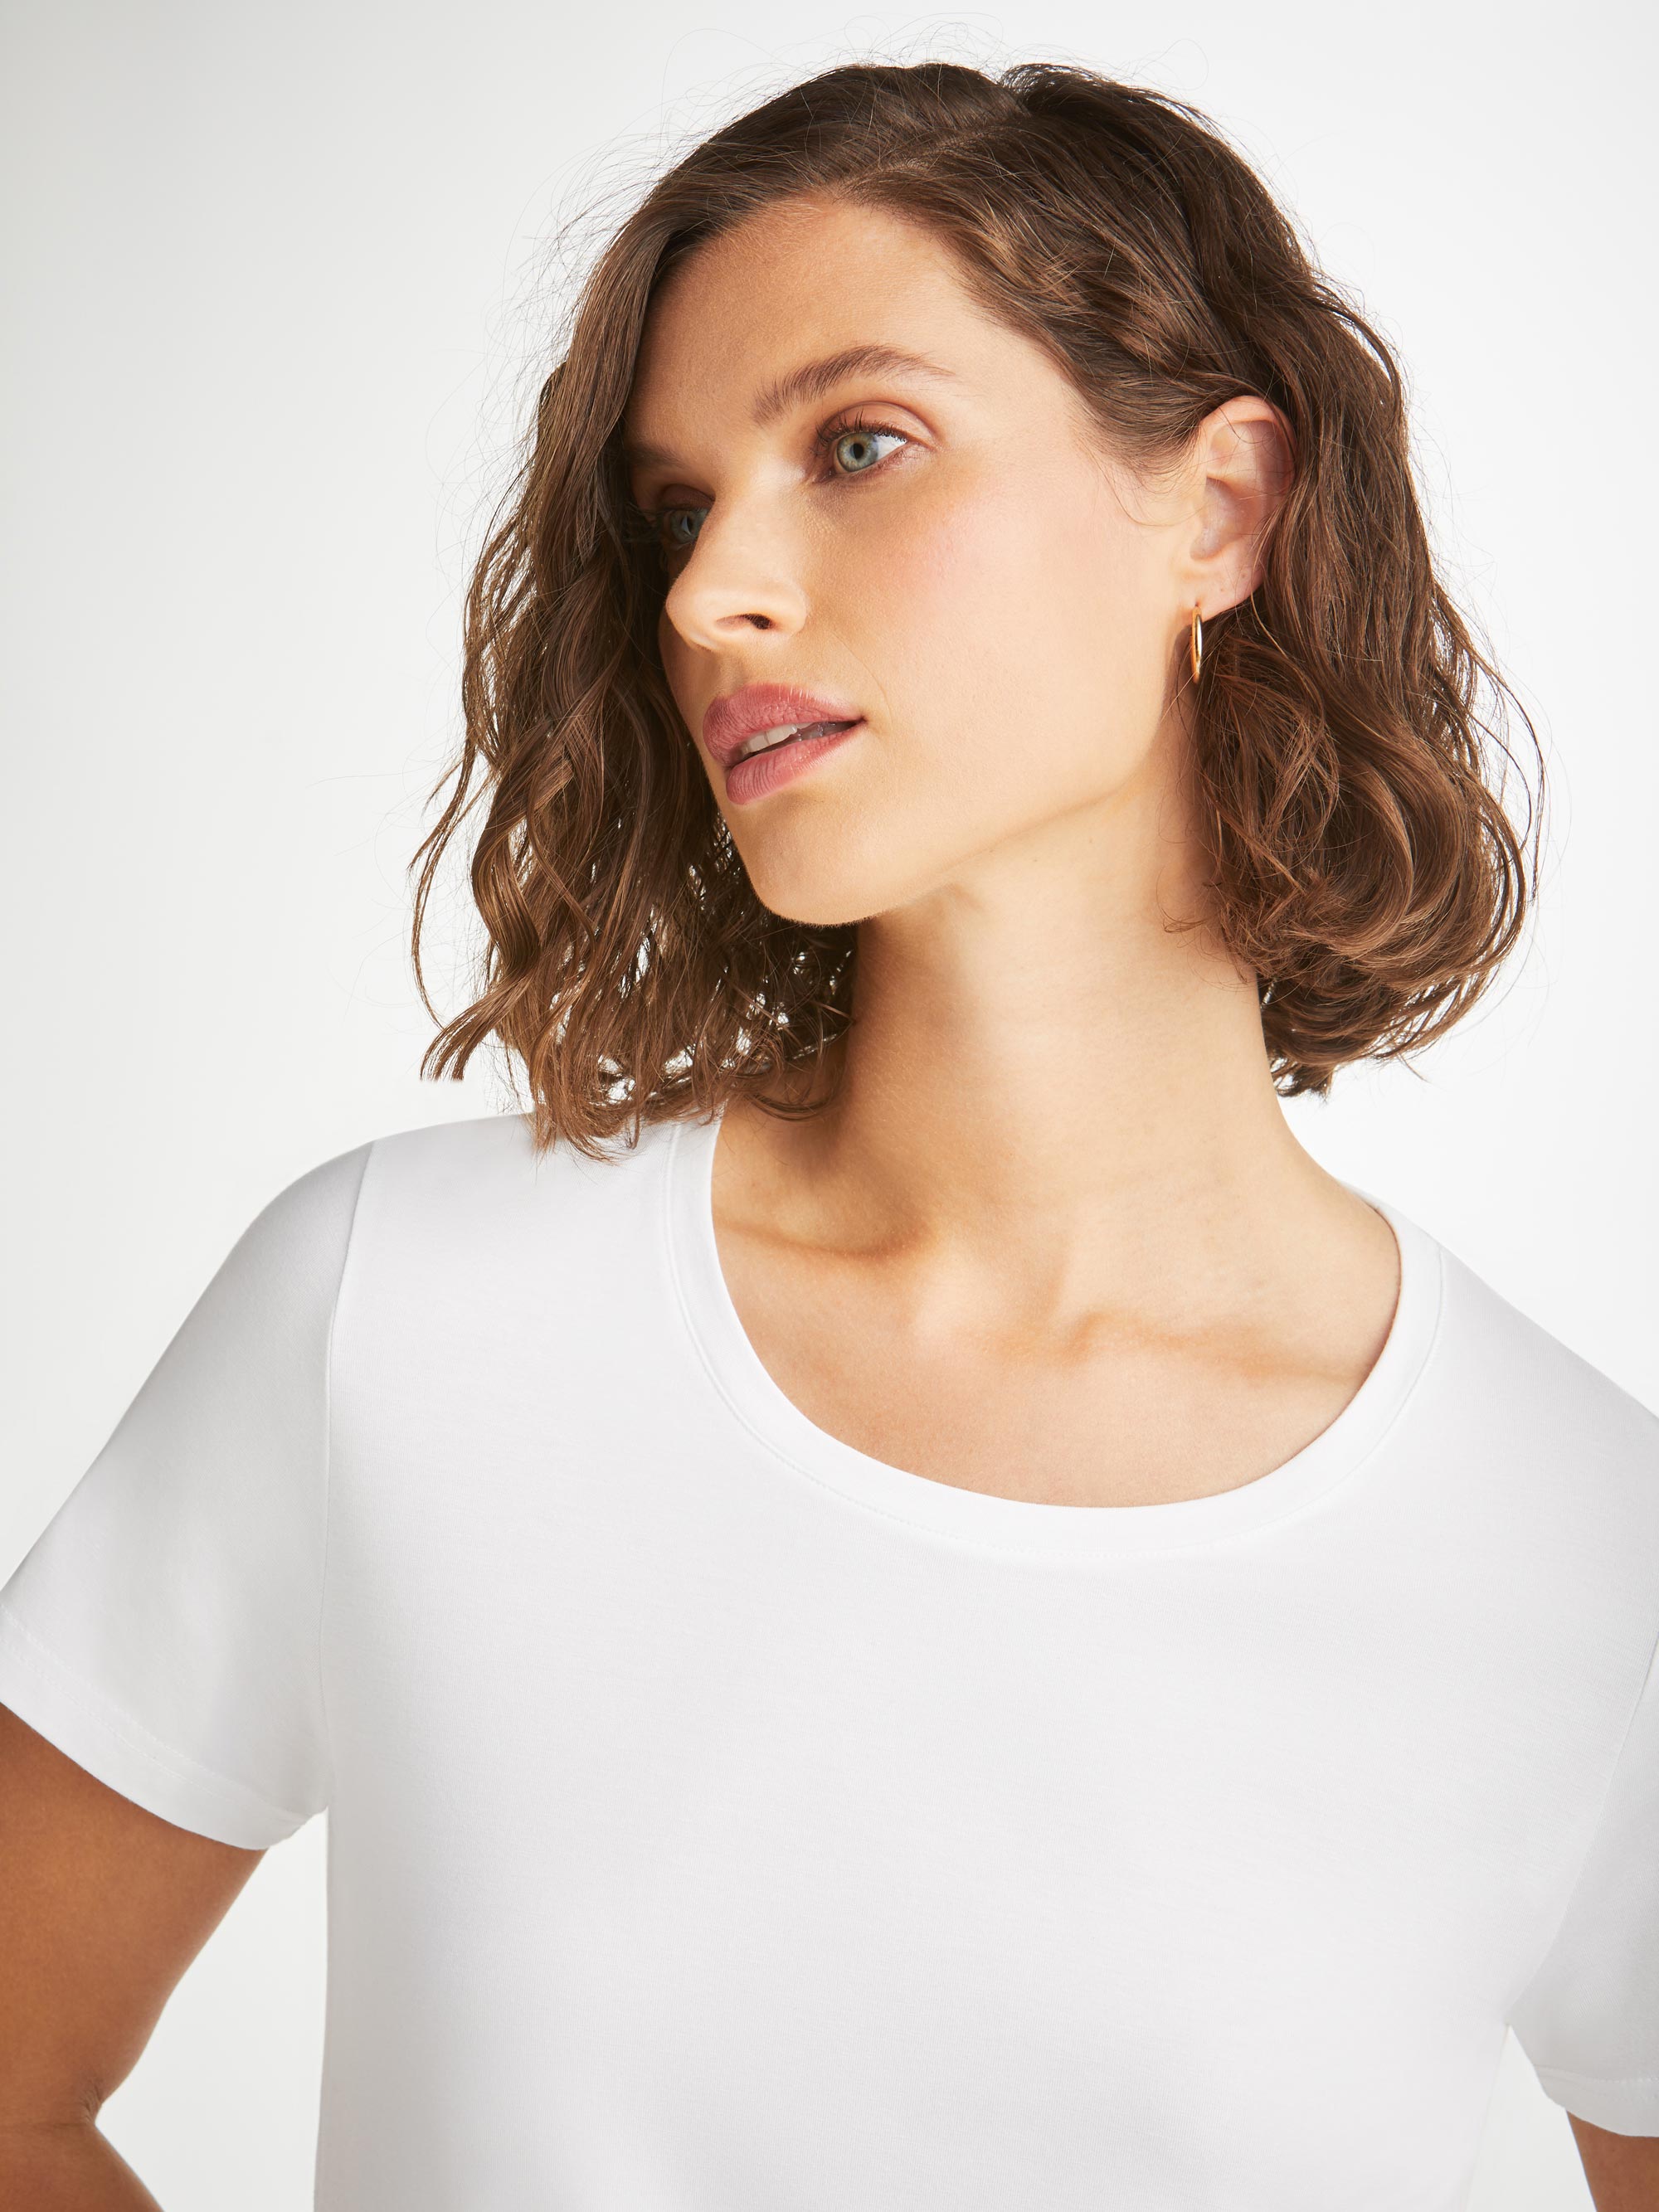 Women's T-Shirt Lara Micro Modal Stretch White